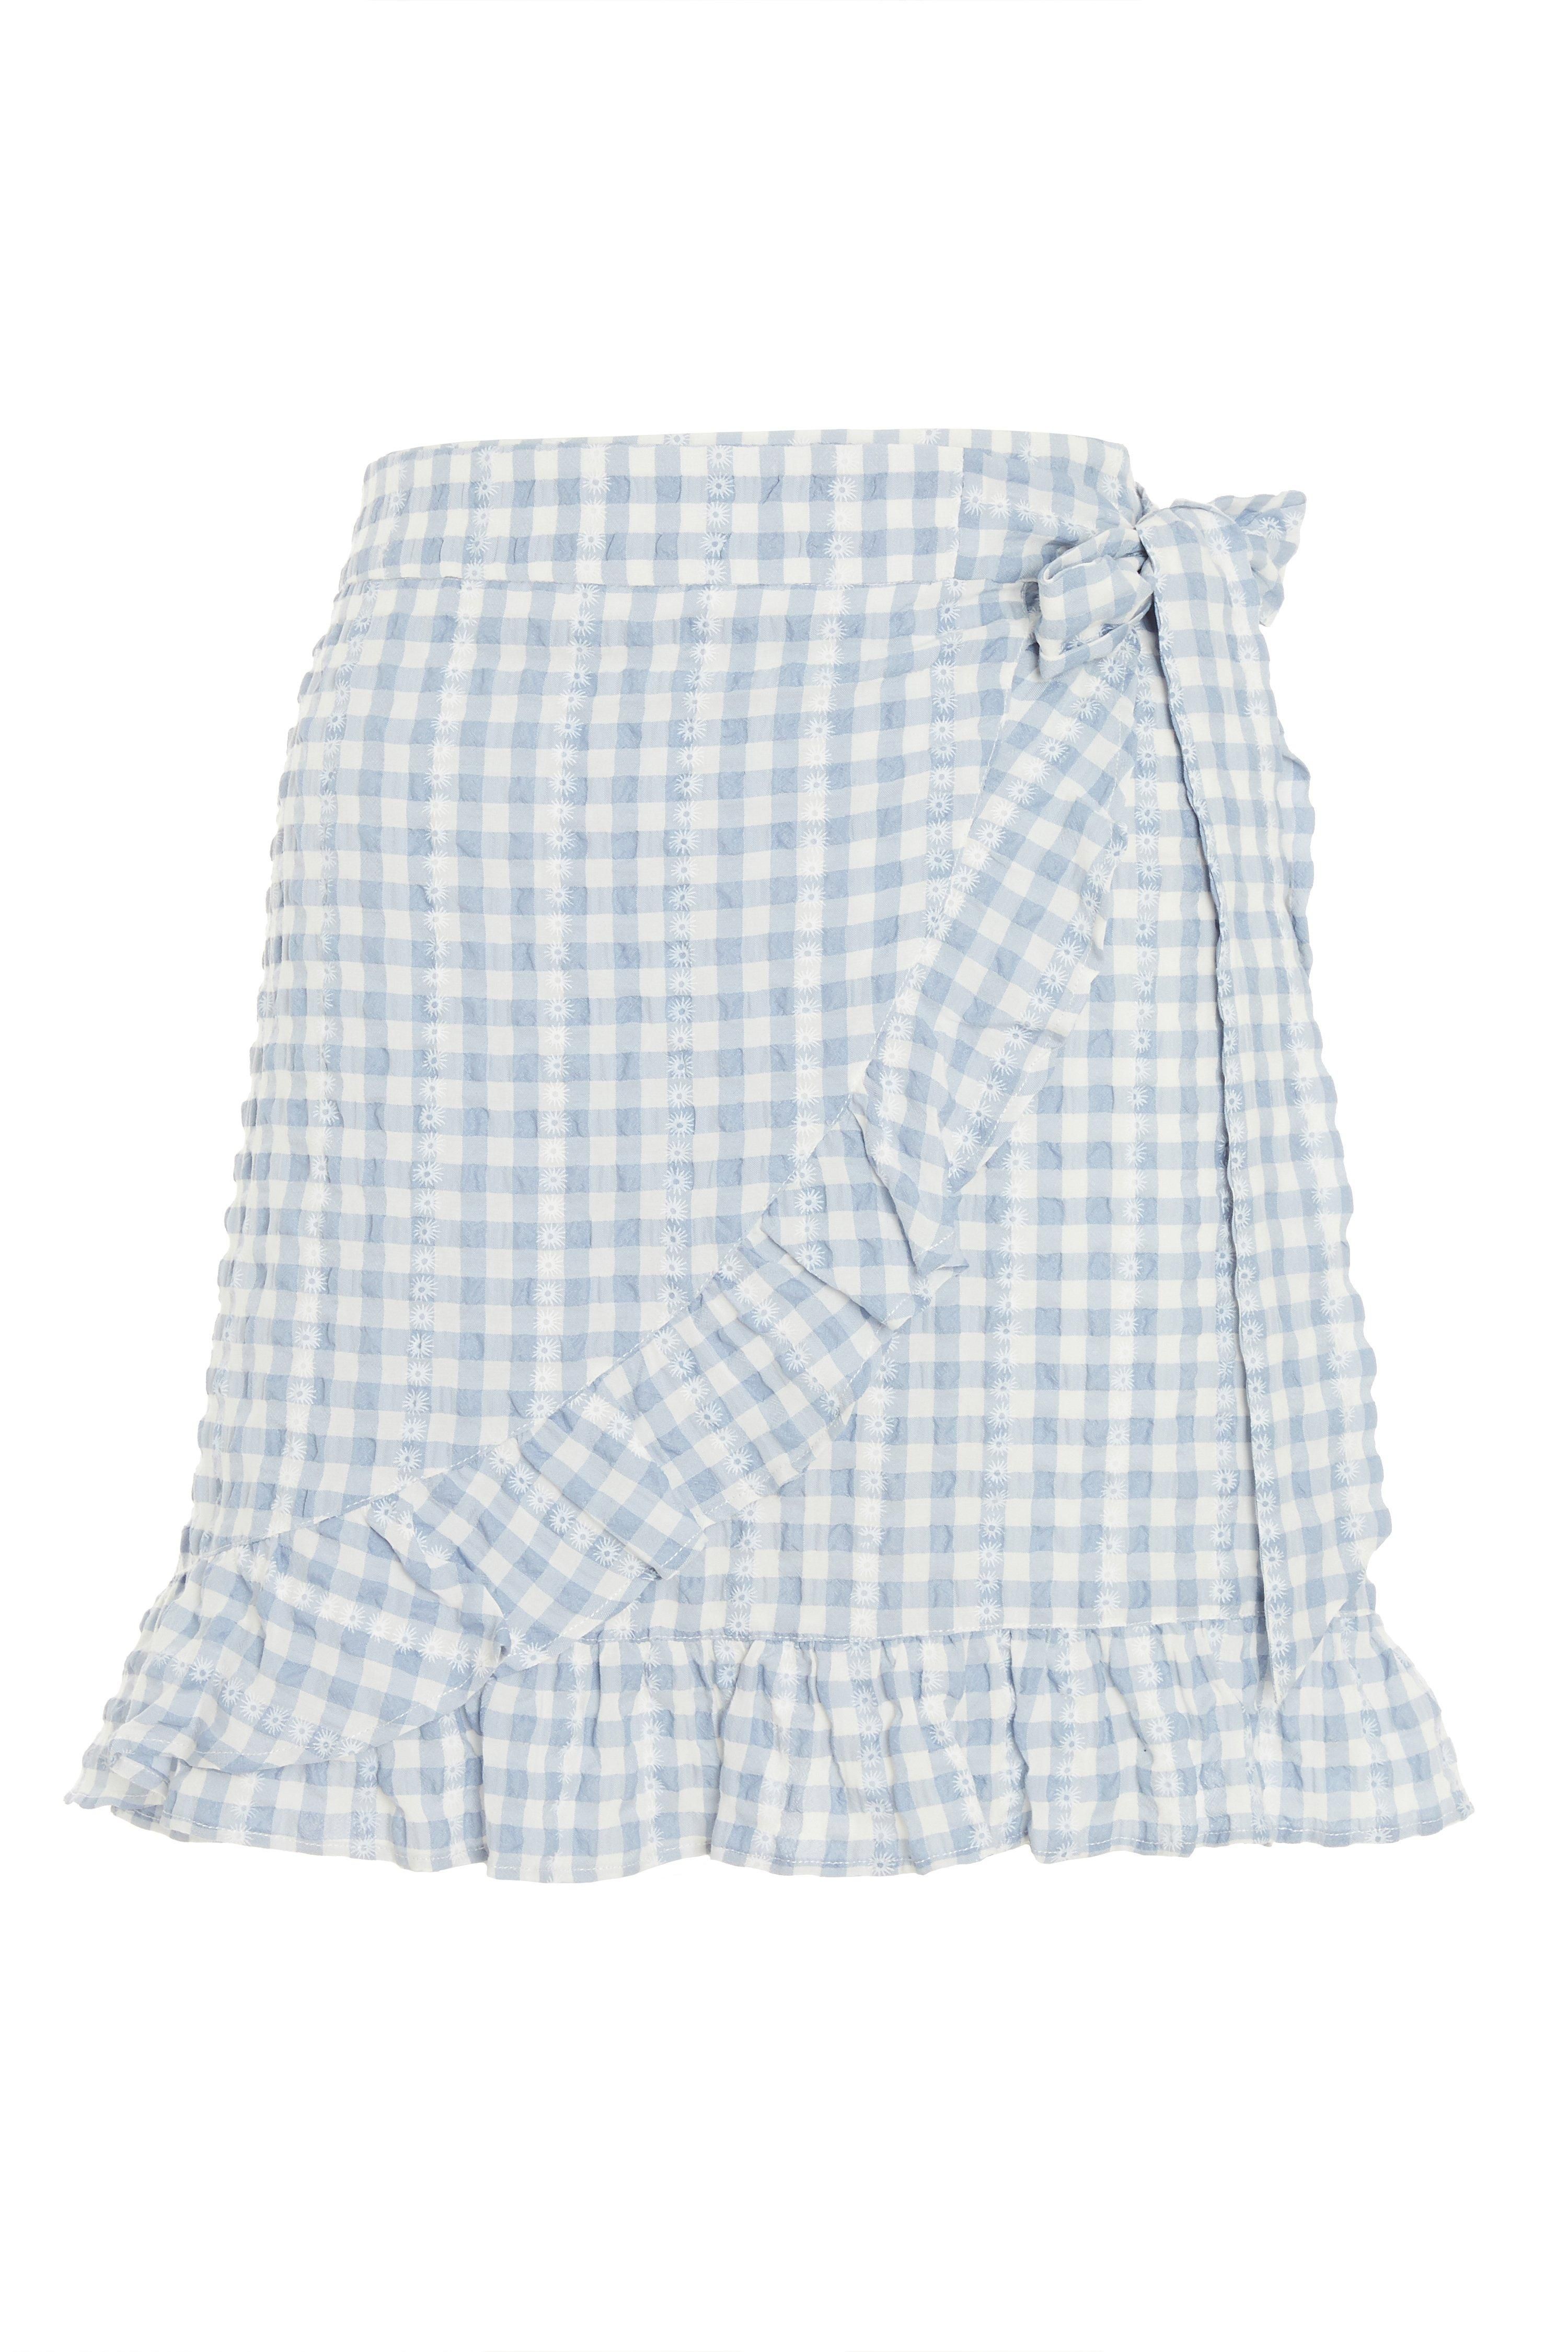 - Gingham print  - Mini skirt  - Wrap style  - High waist  - Length: 56cm approx  - Model Height: 5' 7